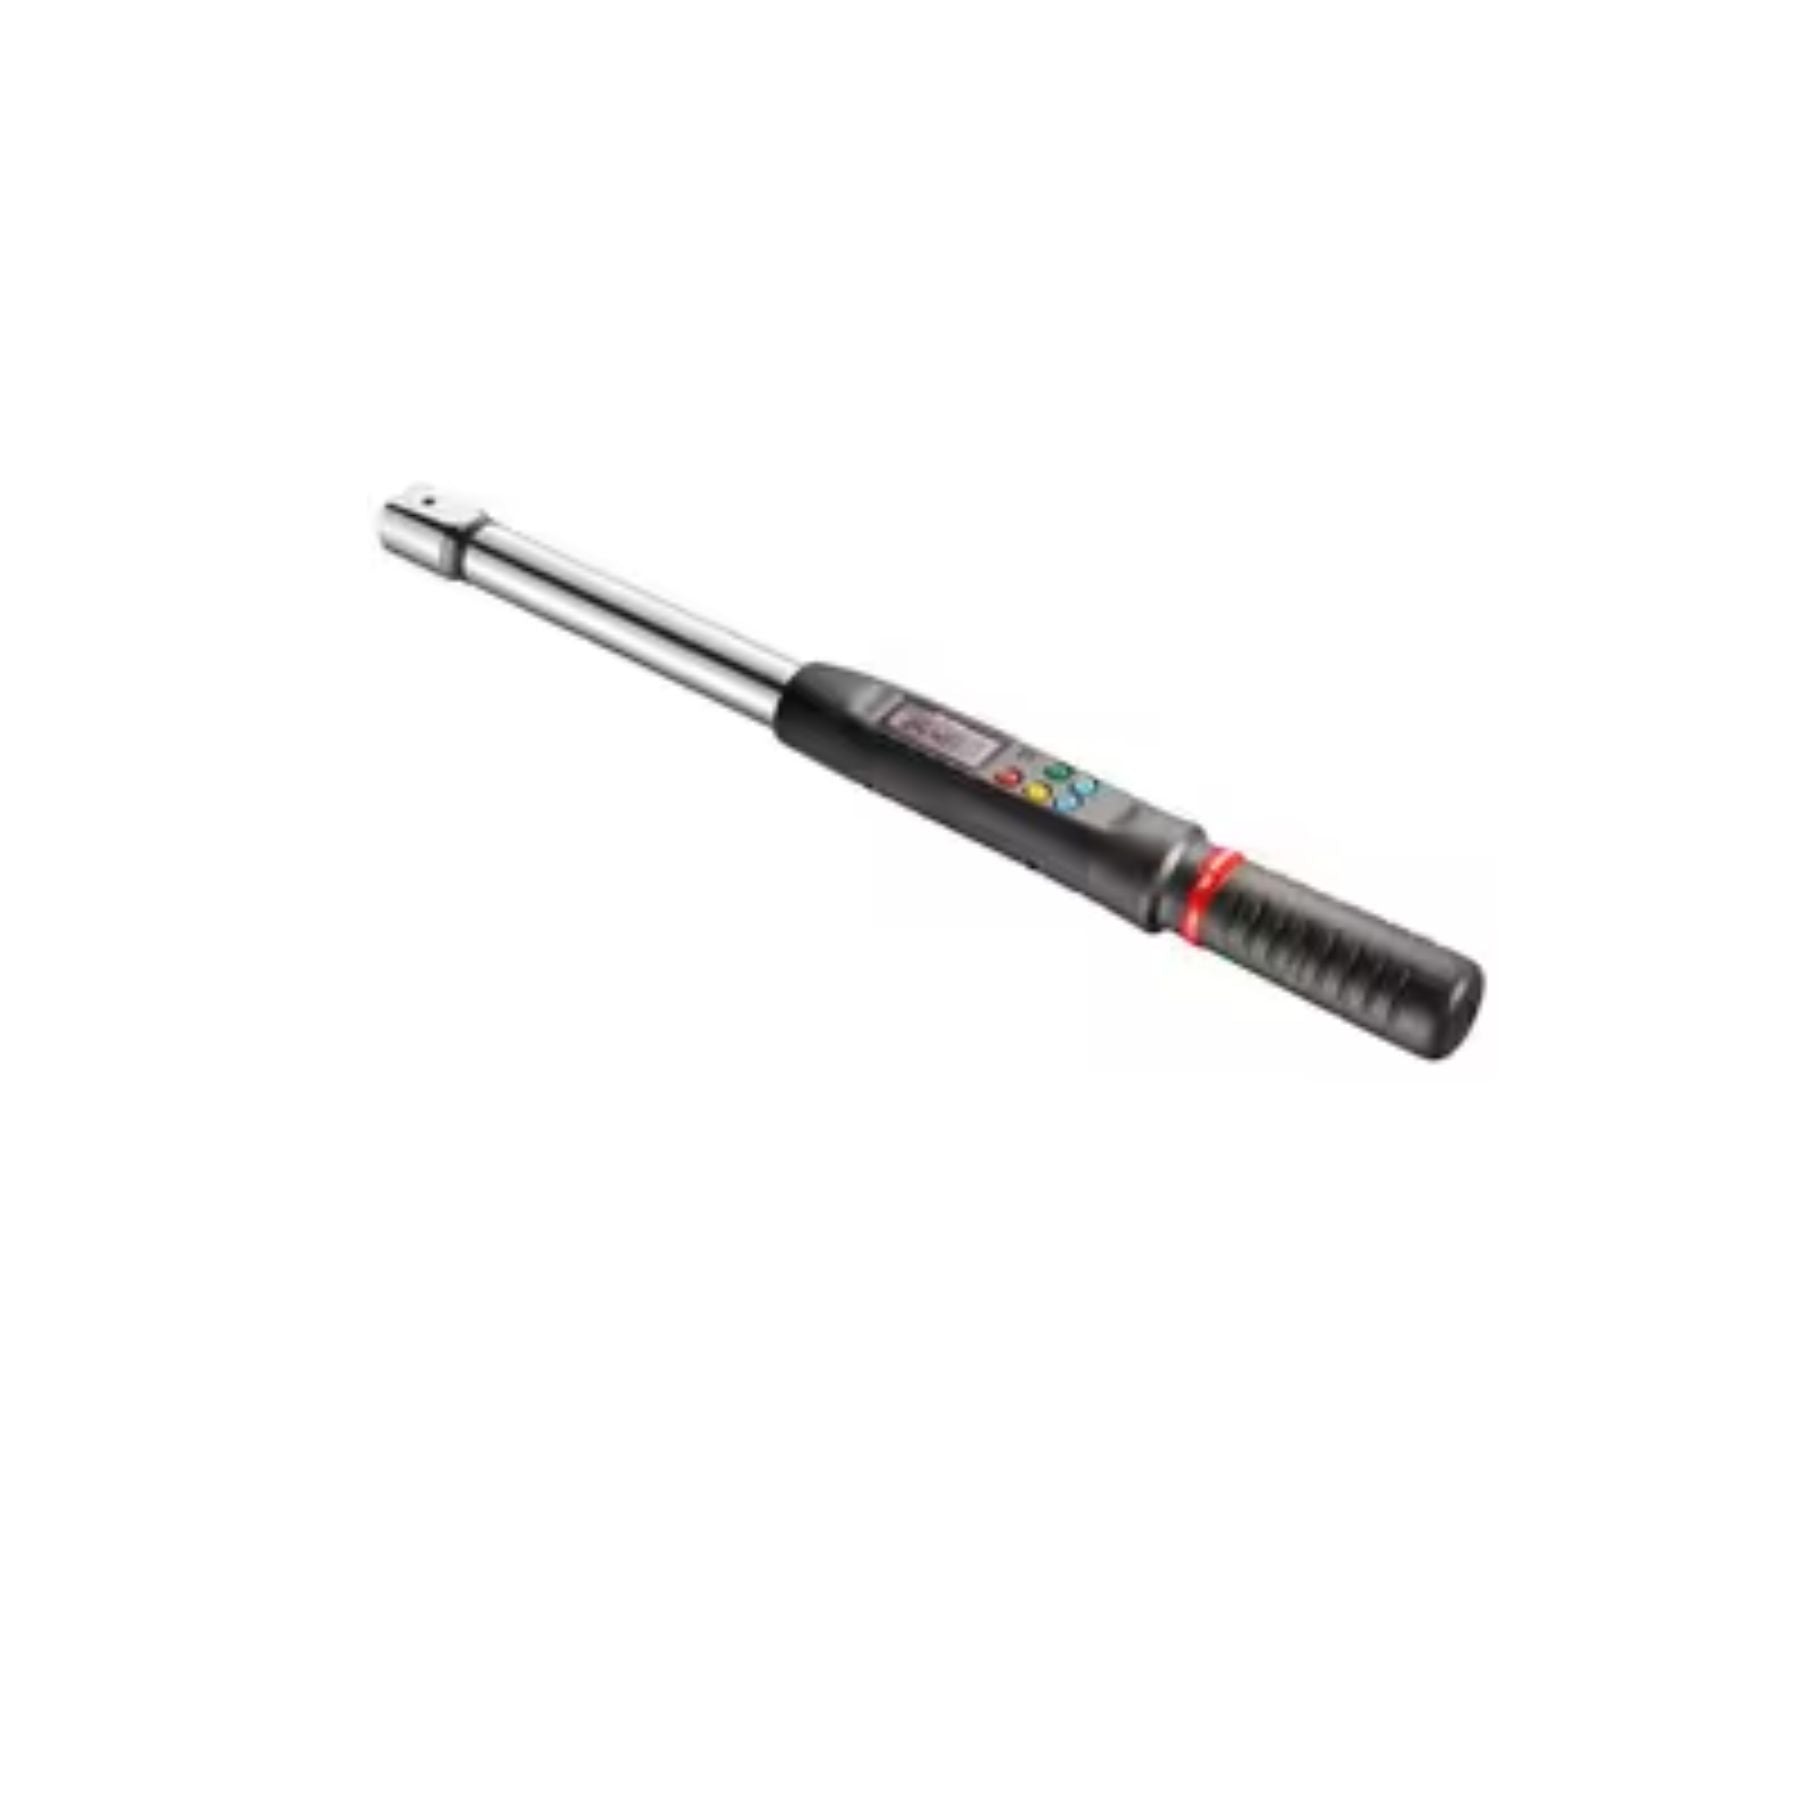 Facom E.306-30D Electronic Torque Wrenches - Capacity 1.5-30.0